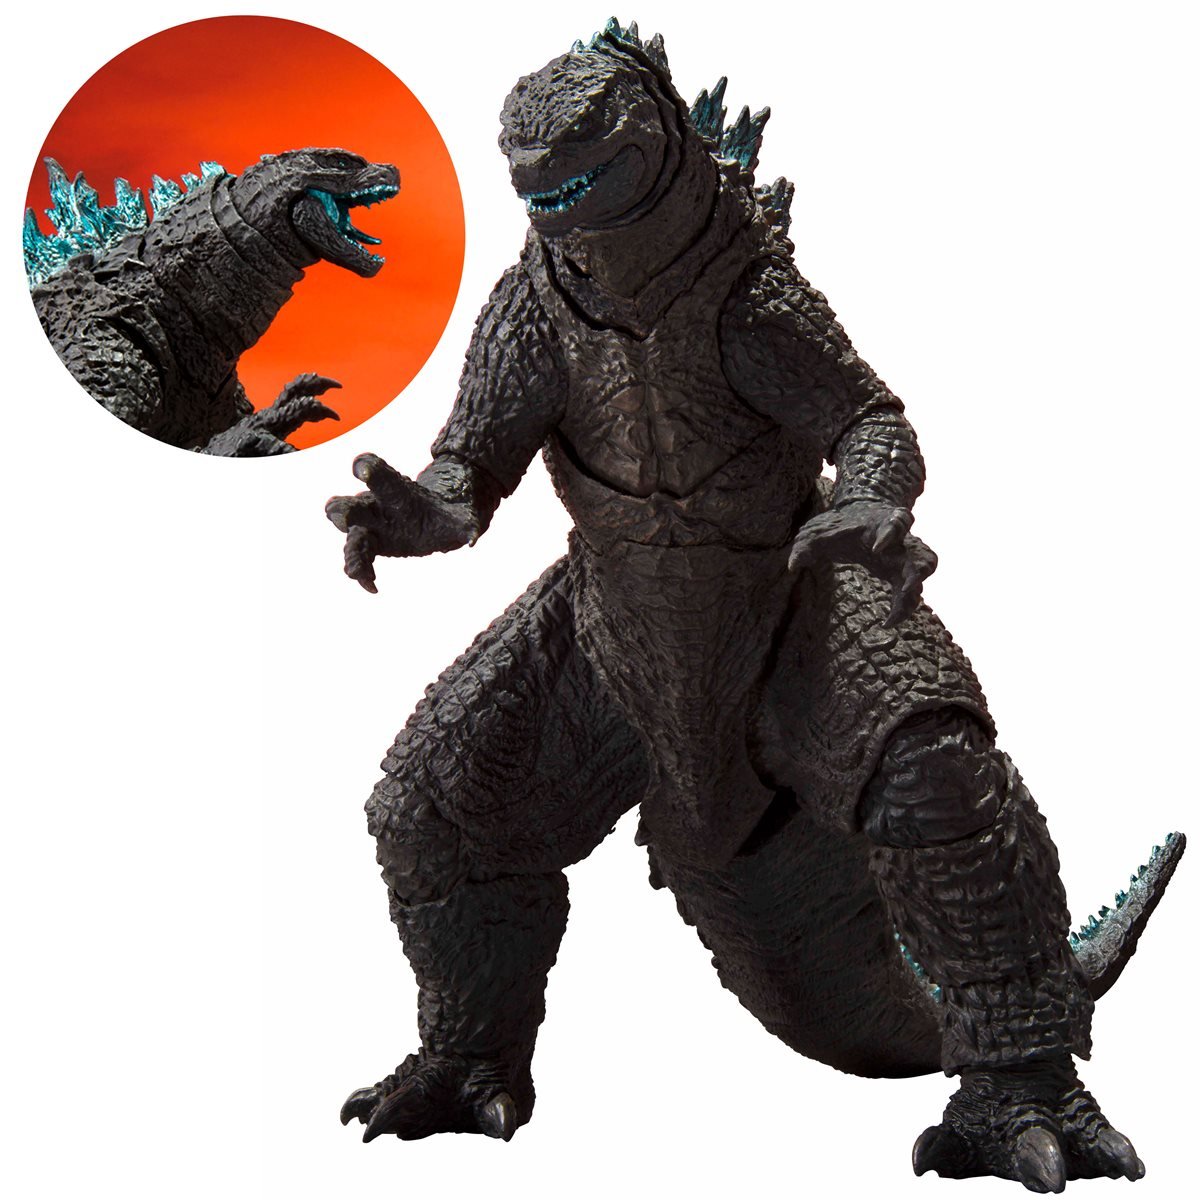 Godzilla Vs Kong Toys - Godzilla Vs Kong Battle Roar Toys By Mnstrfrc